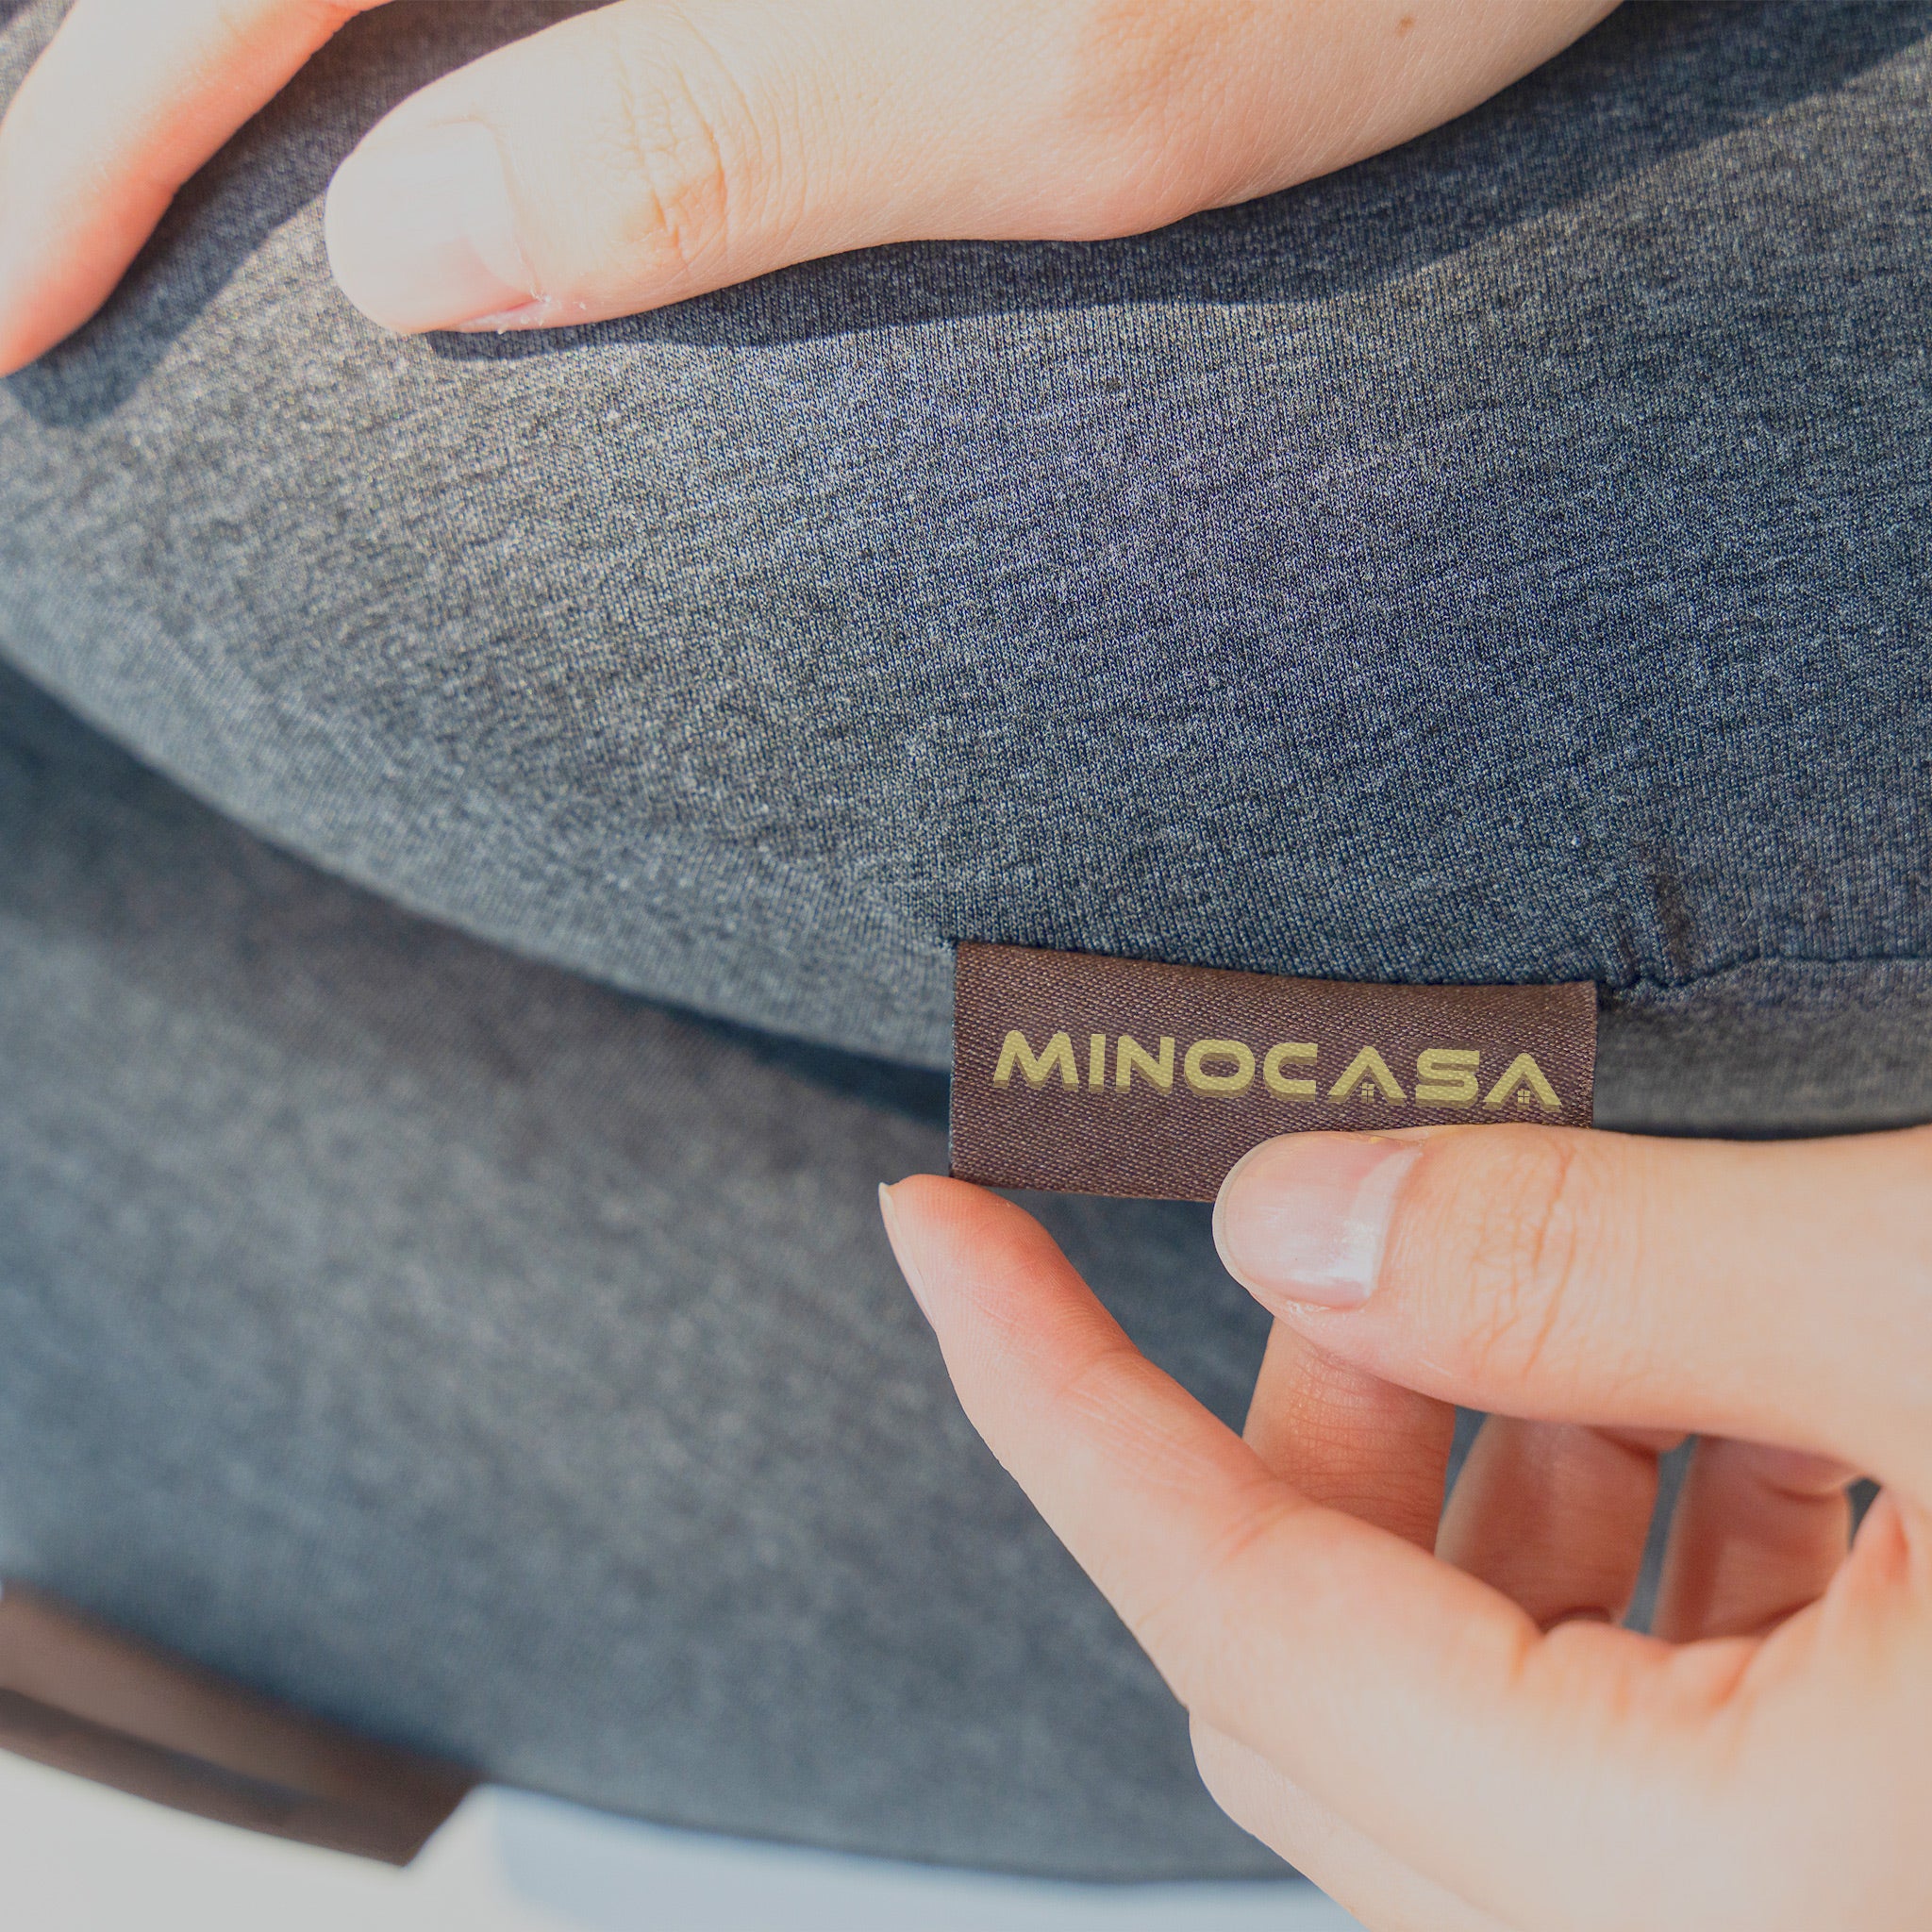 Minocasa Ergonomic and Orthopaedic Neck Supportive Pillow Zoom on Logo